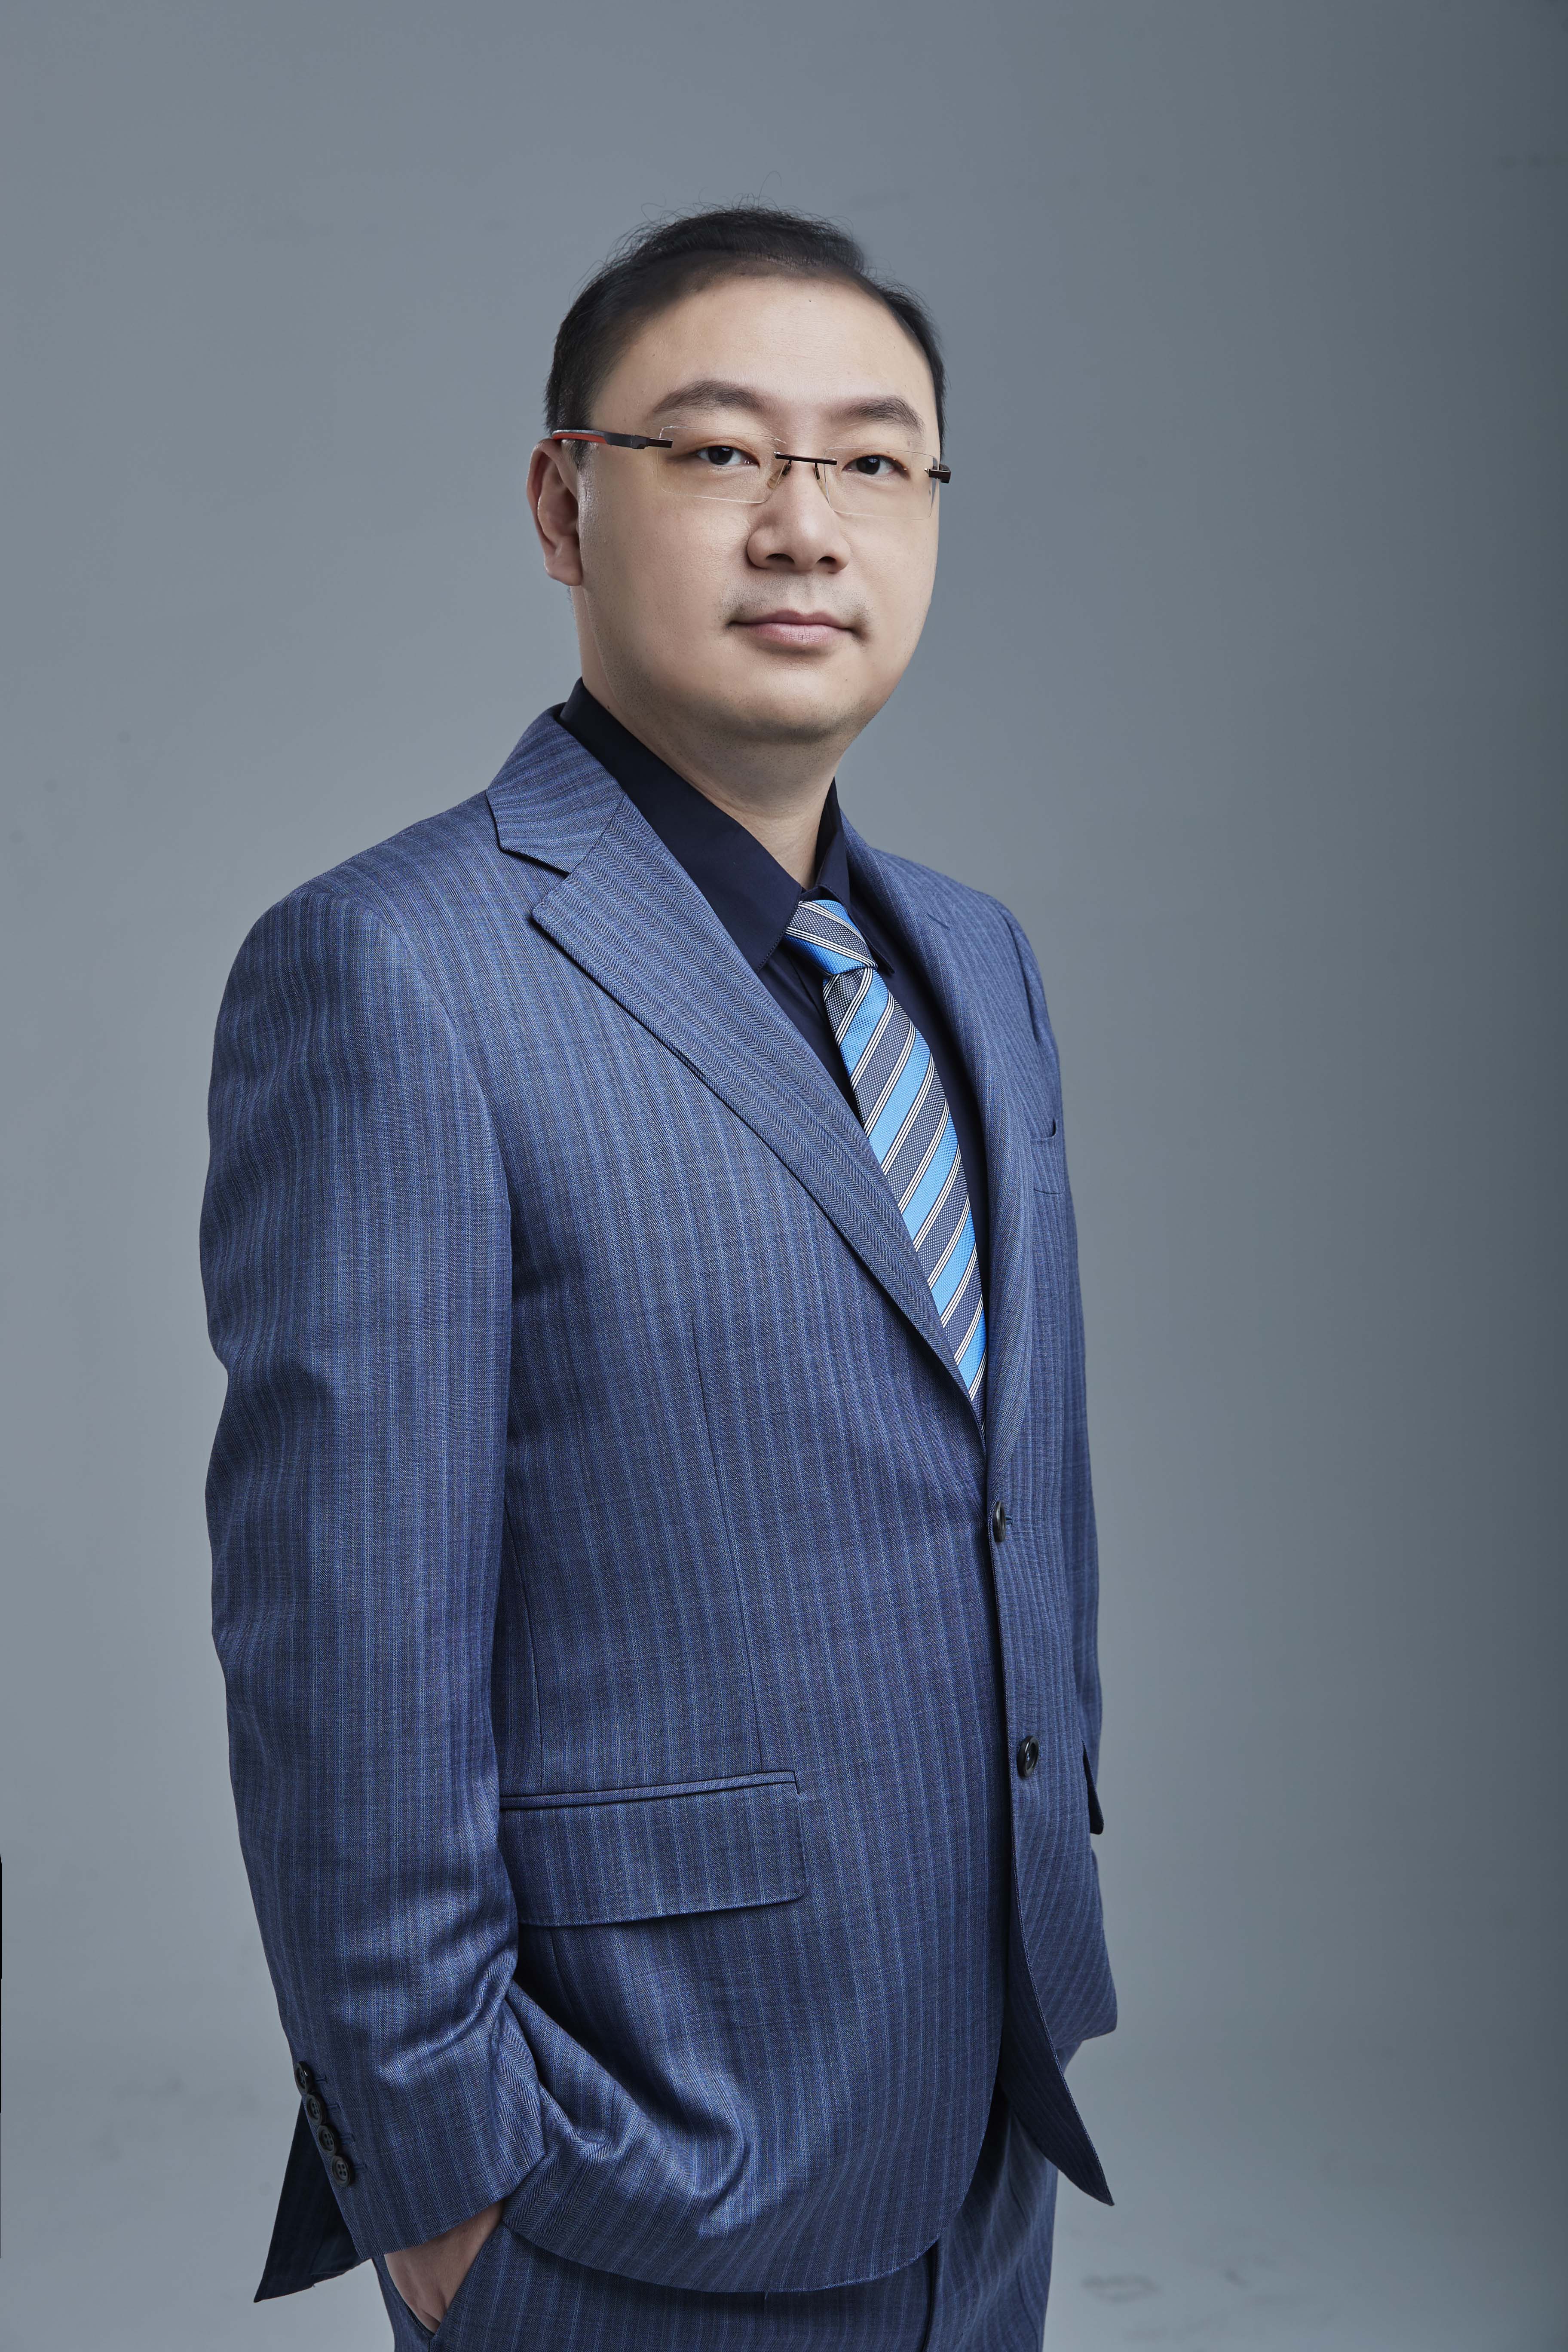 Mr. Andy Xuan Zhang